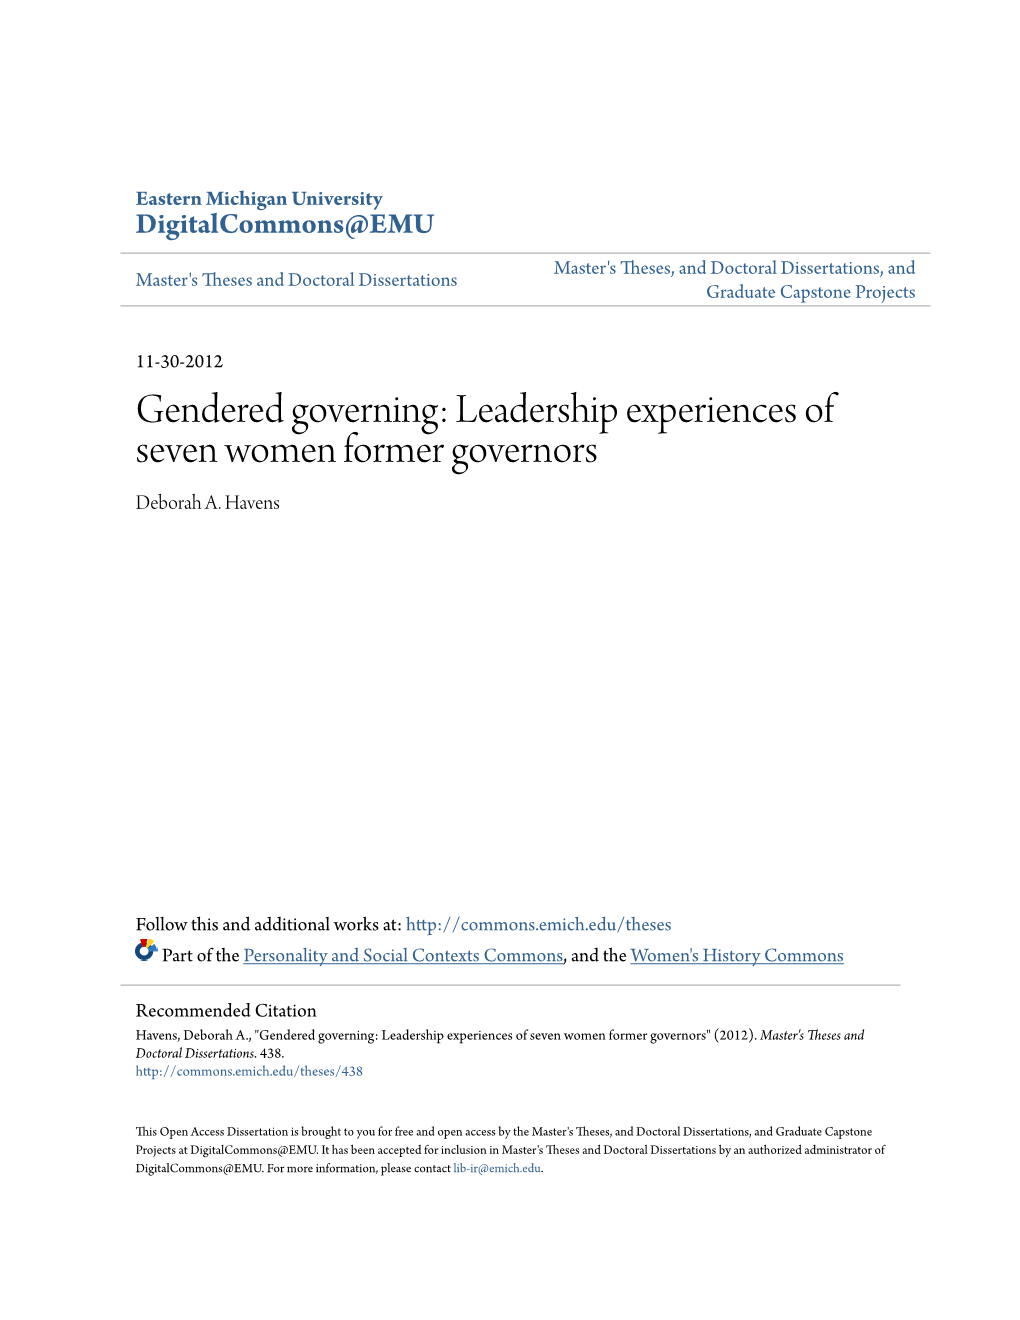 Gendered Governing: Leadership Experiences of Seven Women Former Governors Deborah A